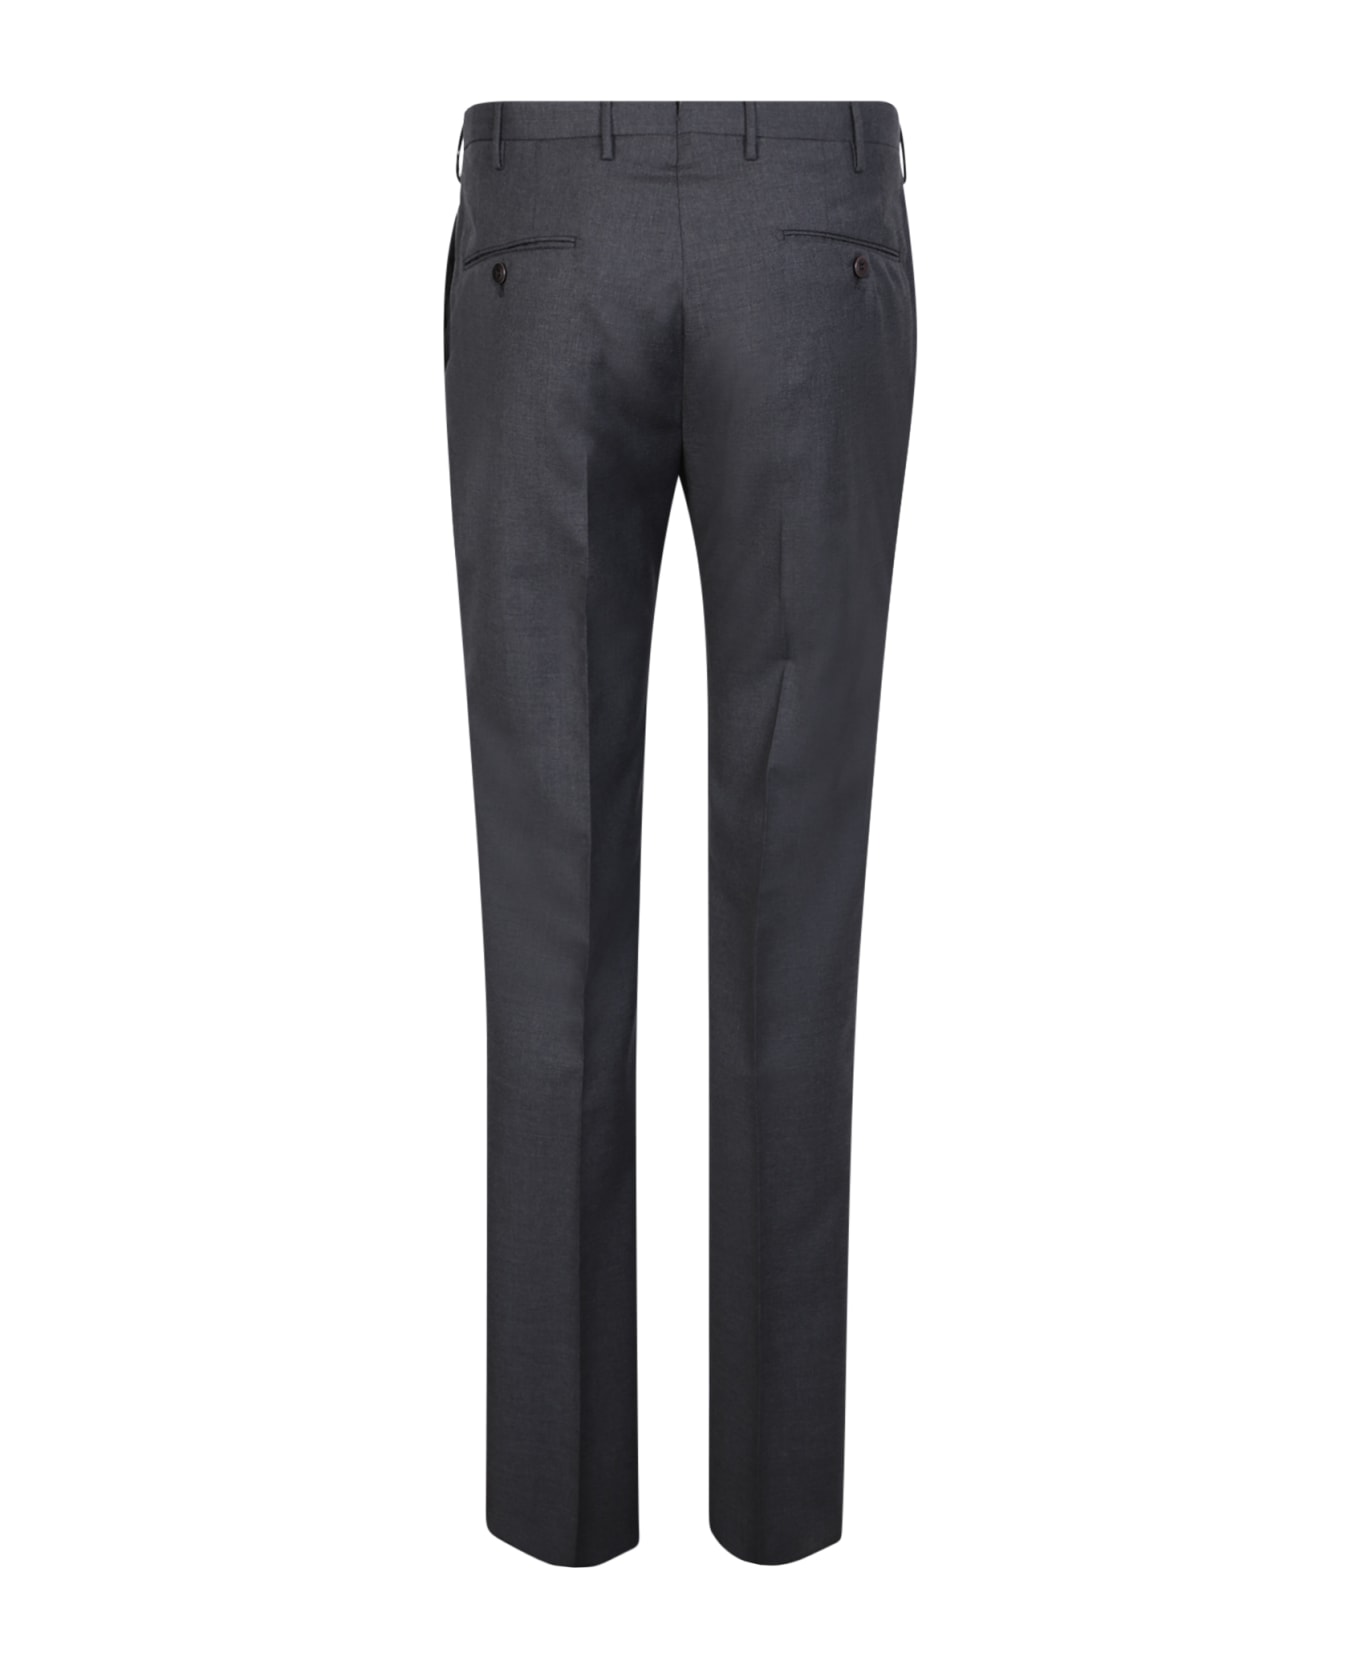 Incotex Grey Slim Fit Trousers - Grey ボトムス